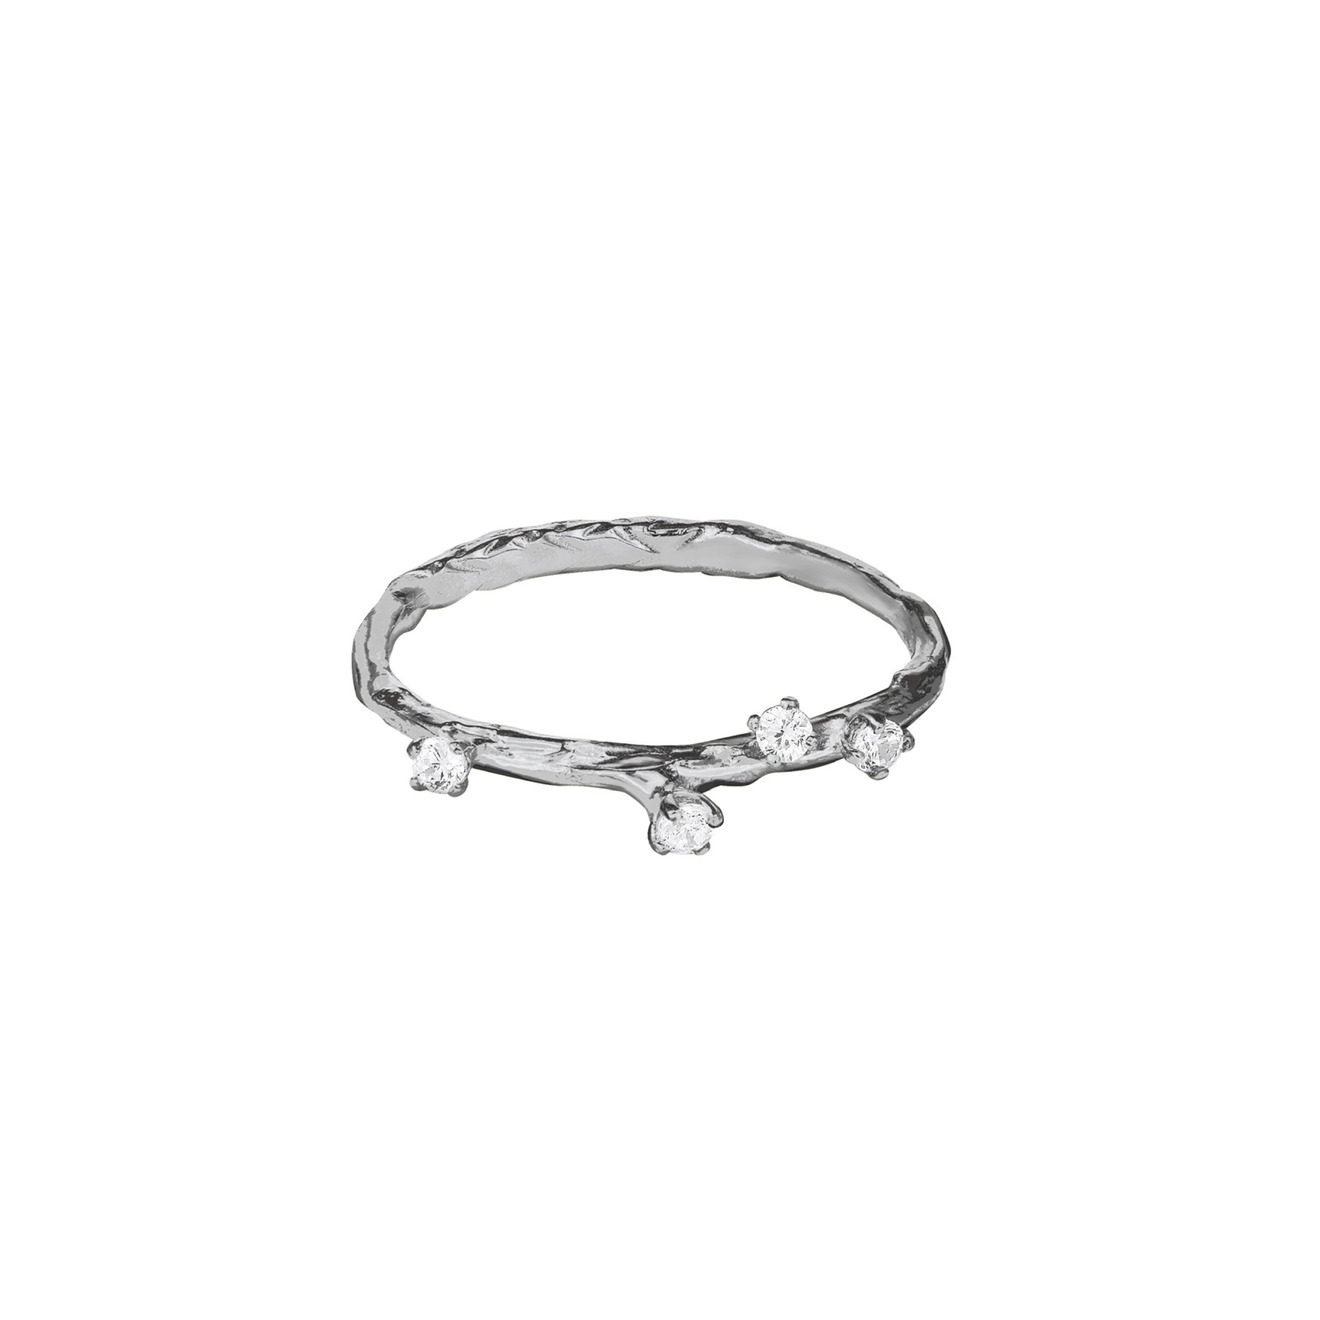 nastya maximova безразмерное кольцо из серебра с фианитами Nastya Maximova Тонкое кольцо из серебра с фианитами